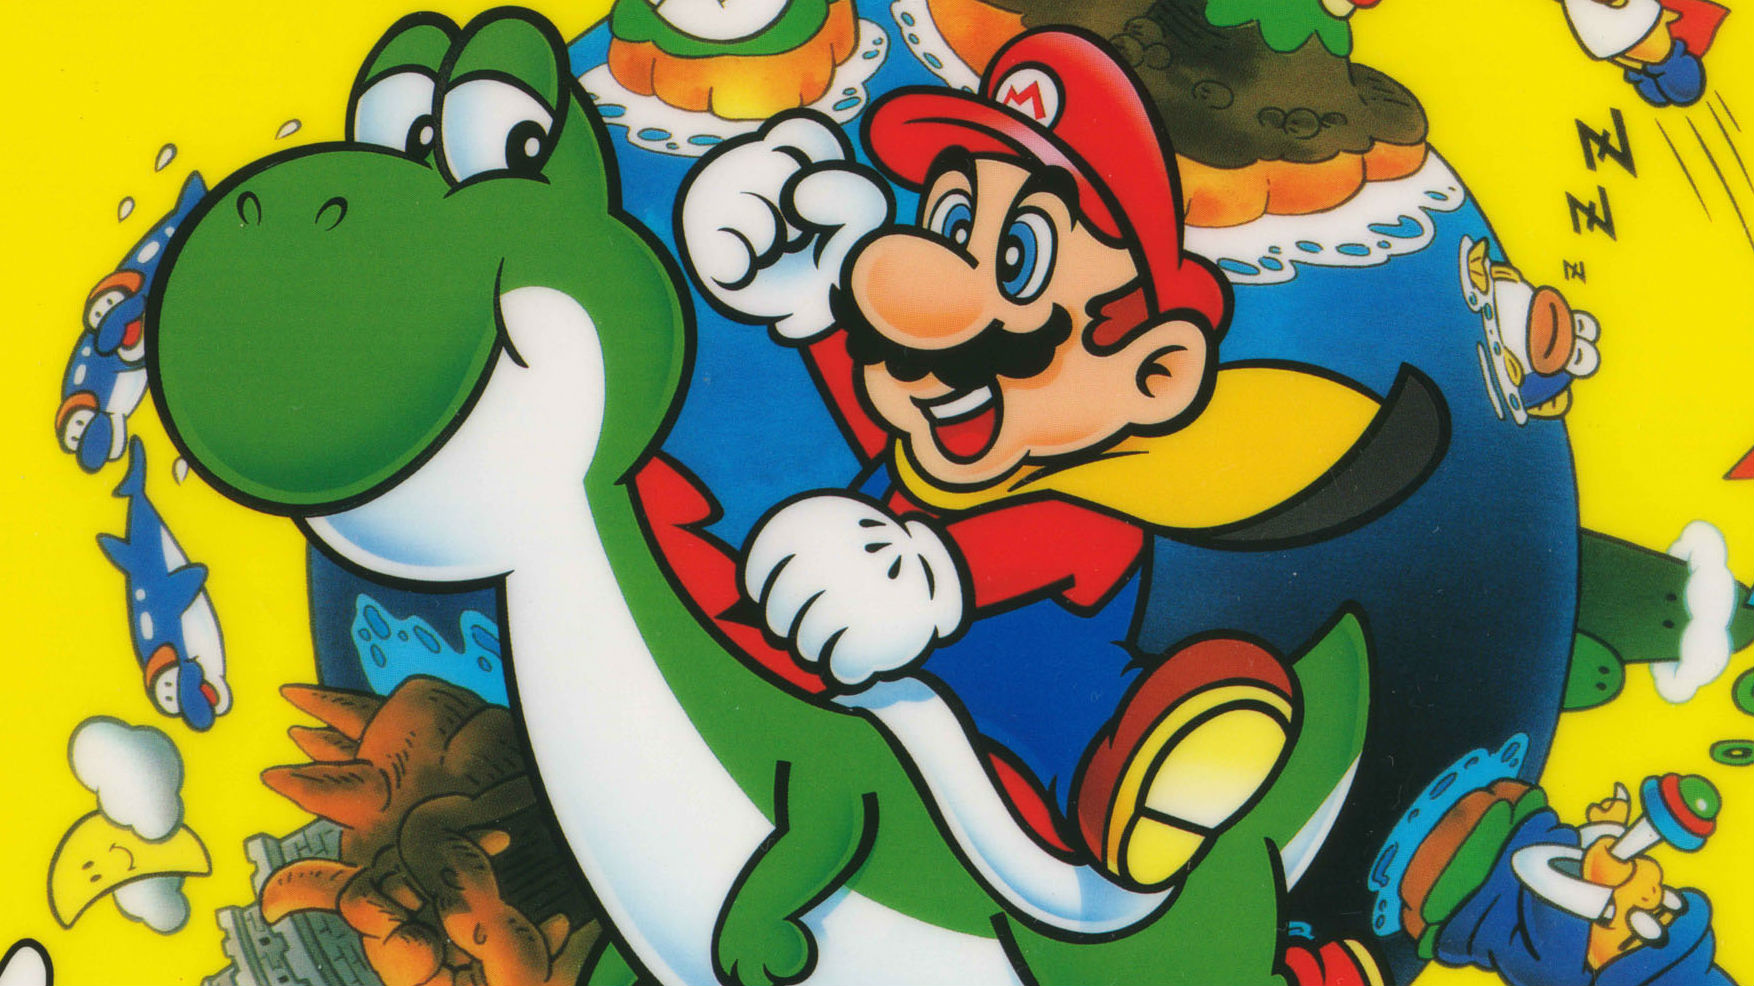 Mario vs Donkey Kong Switch Adds New Worlds - Siliconera